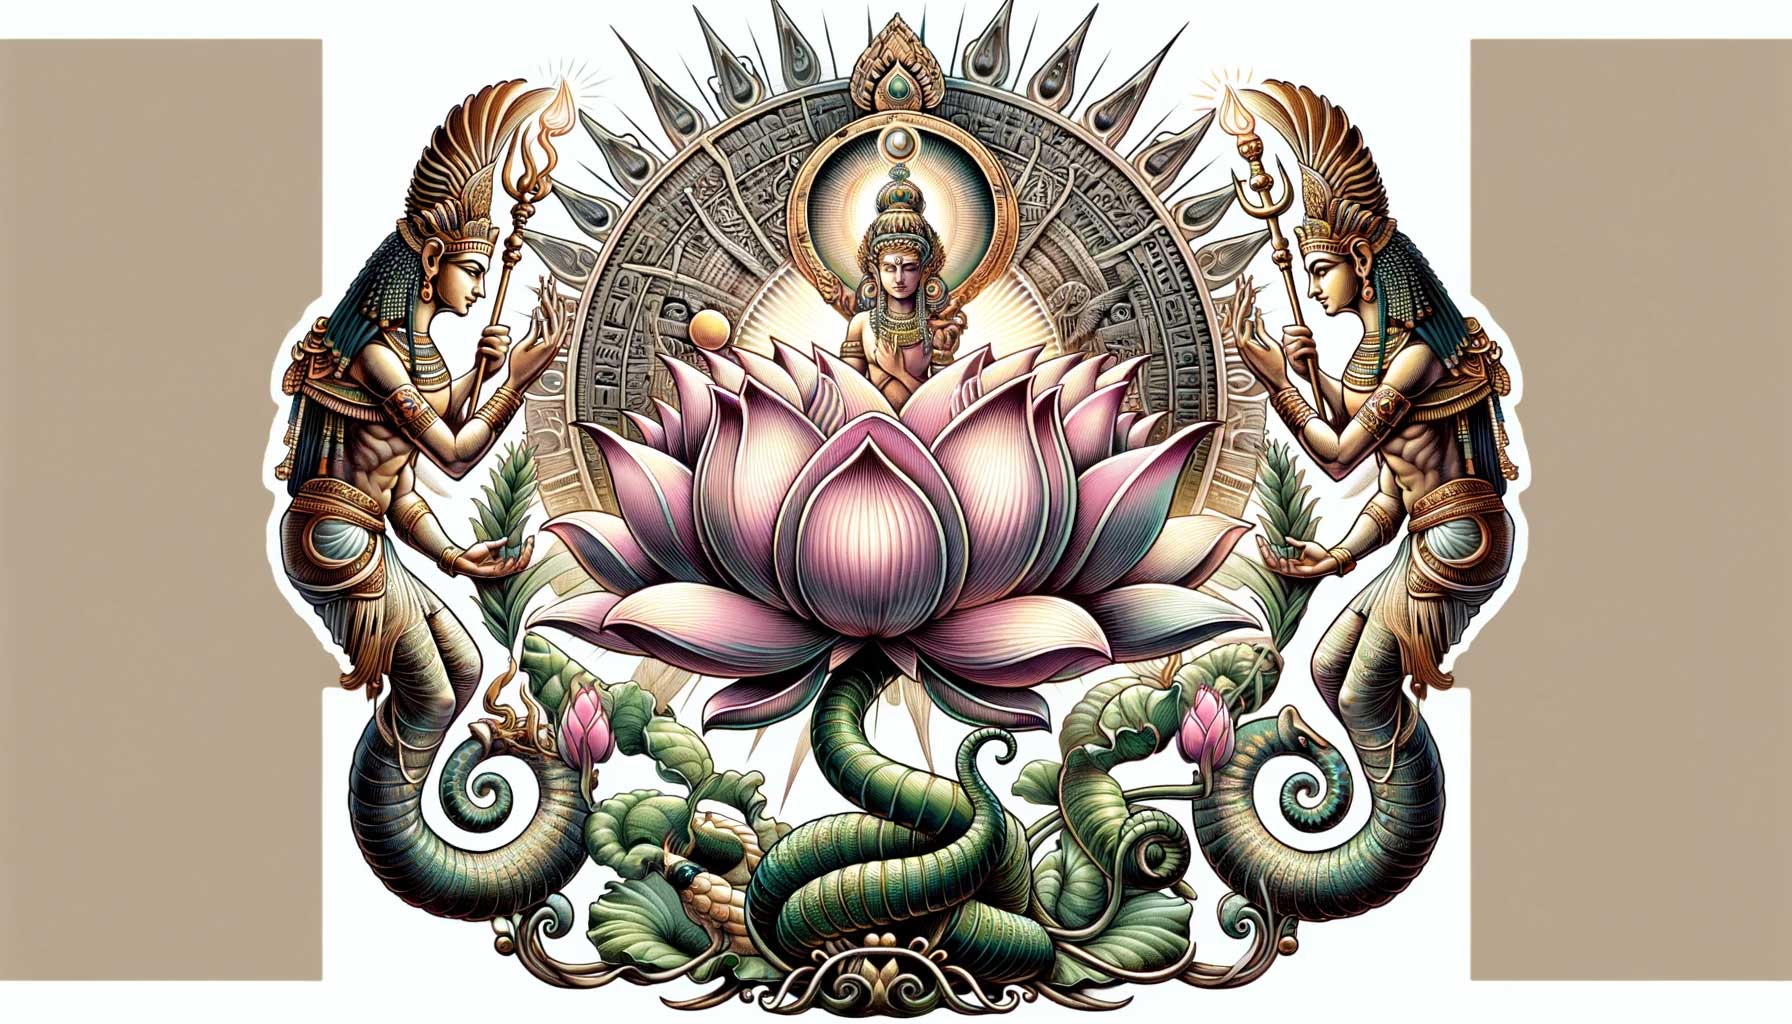 Lotusblume Tattoo: Bedeutung, Motive und Ideen